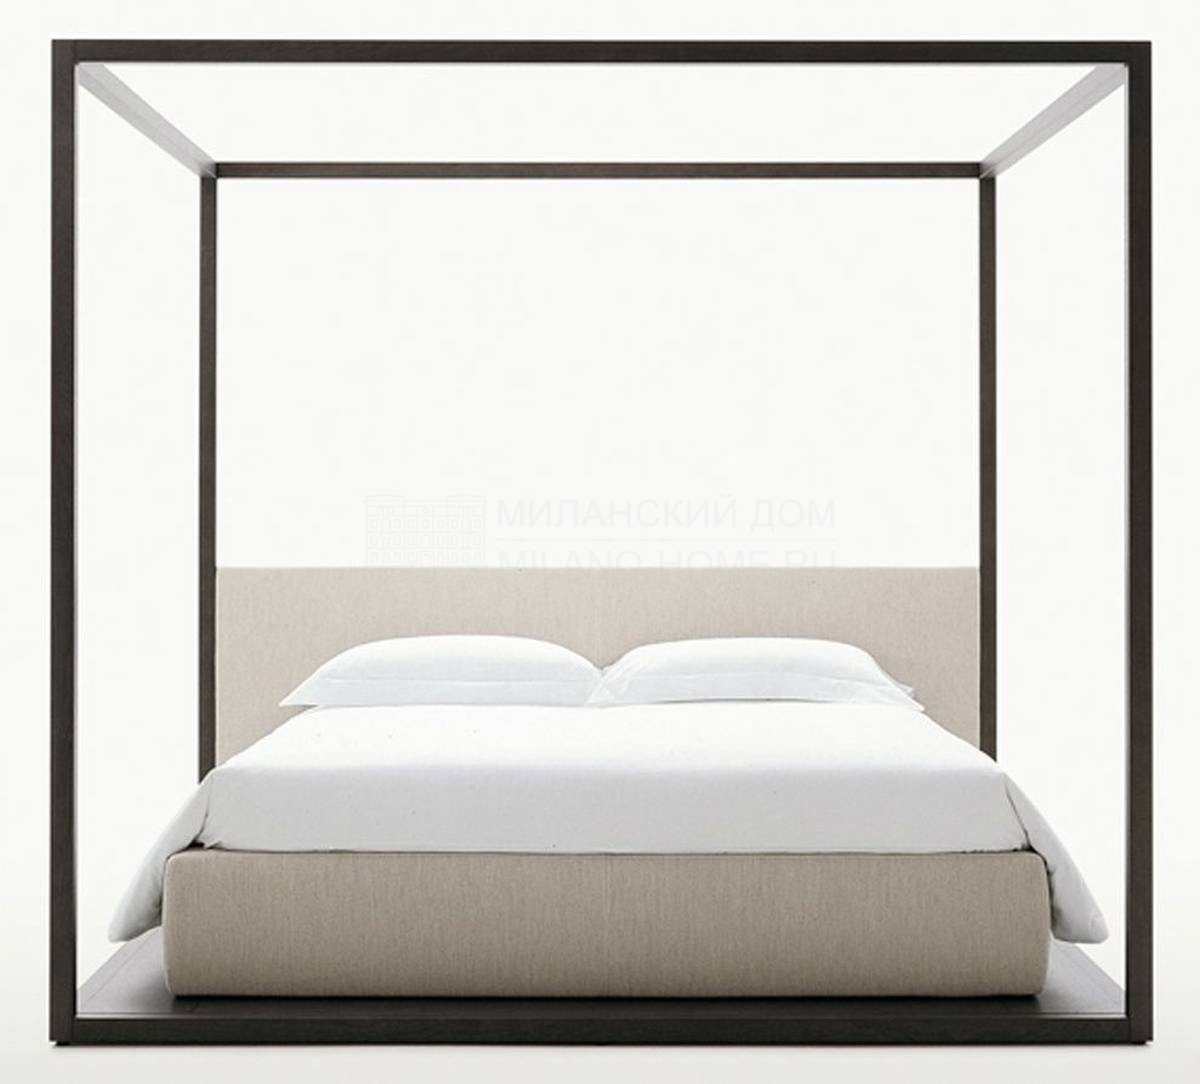 Кровать с балдахином Alcova ACLE1 из Италии фабрики B&B MAXALTO